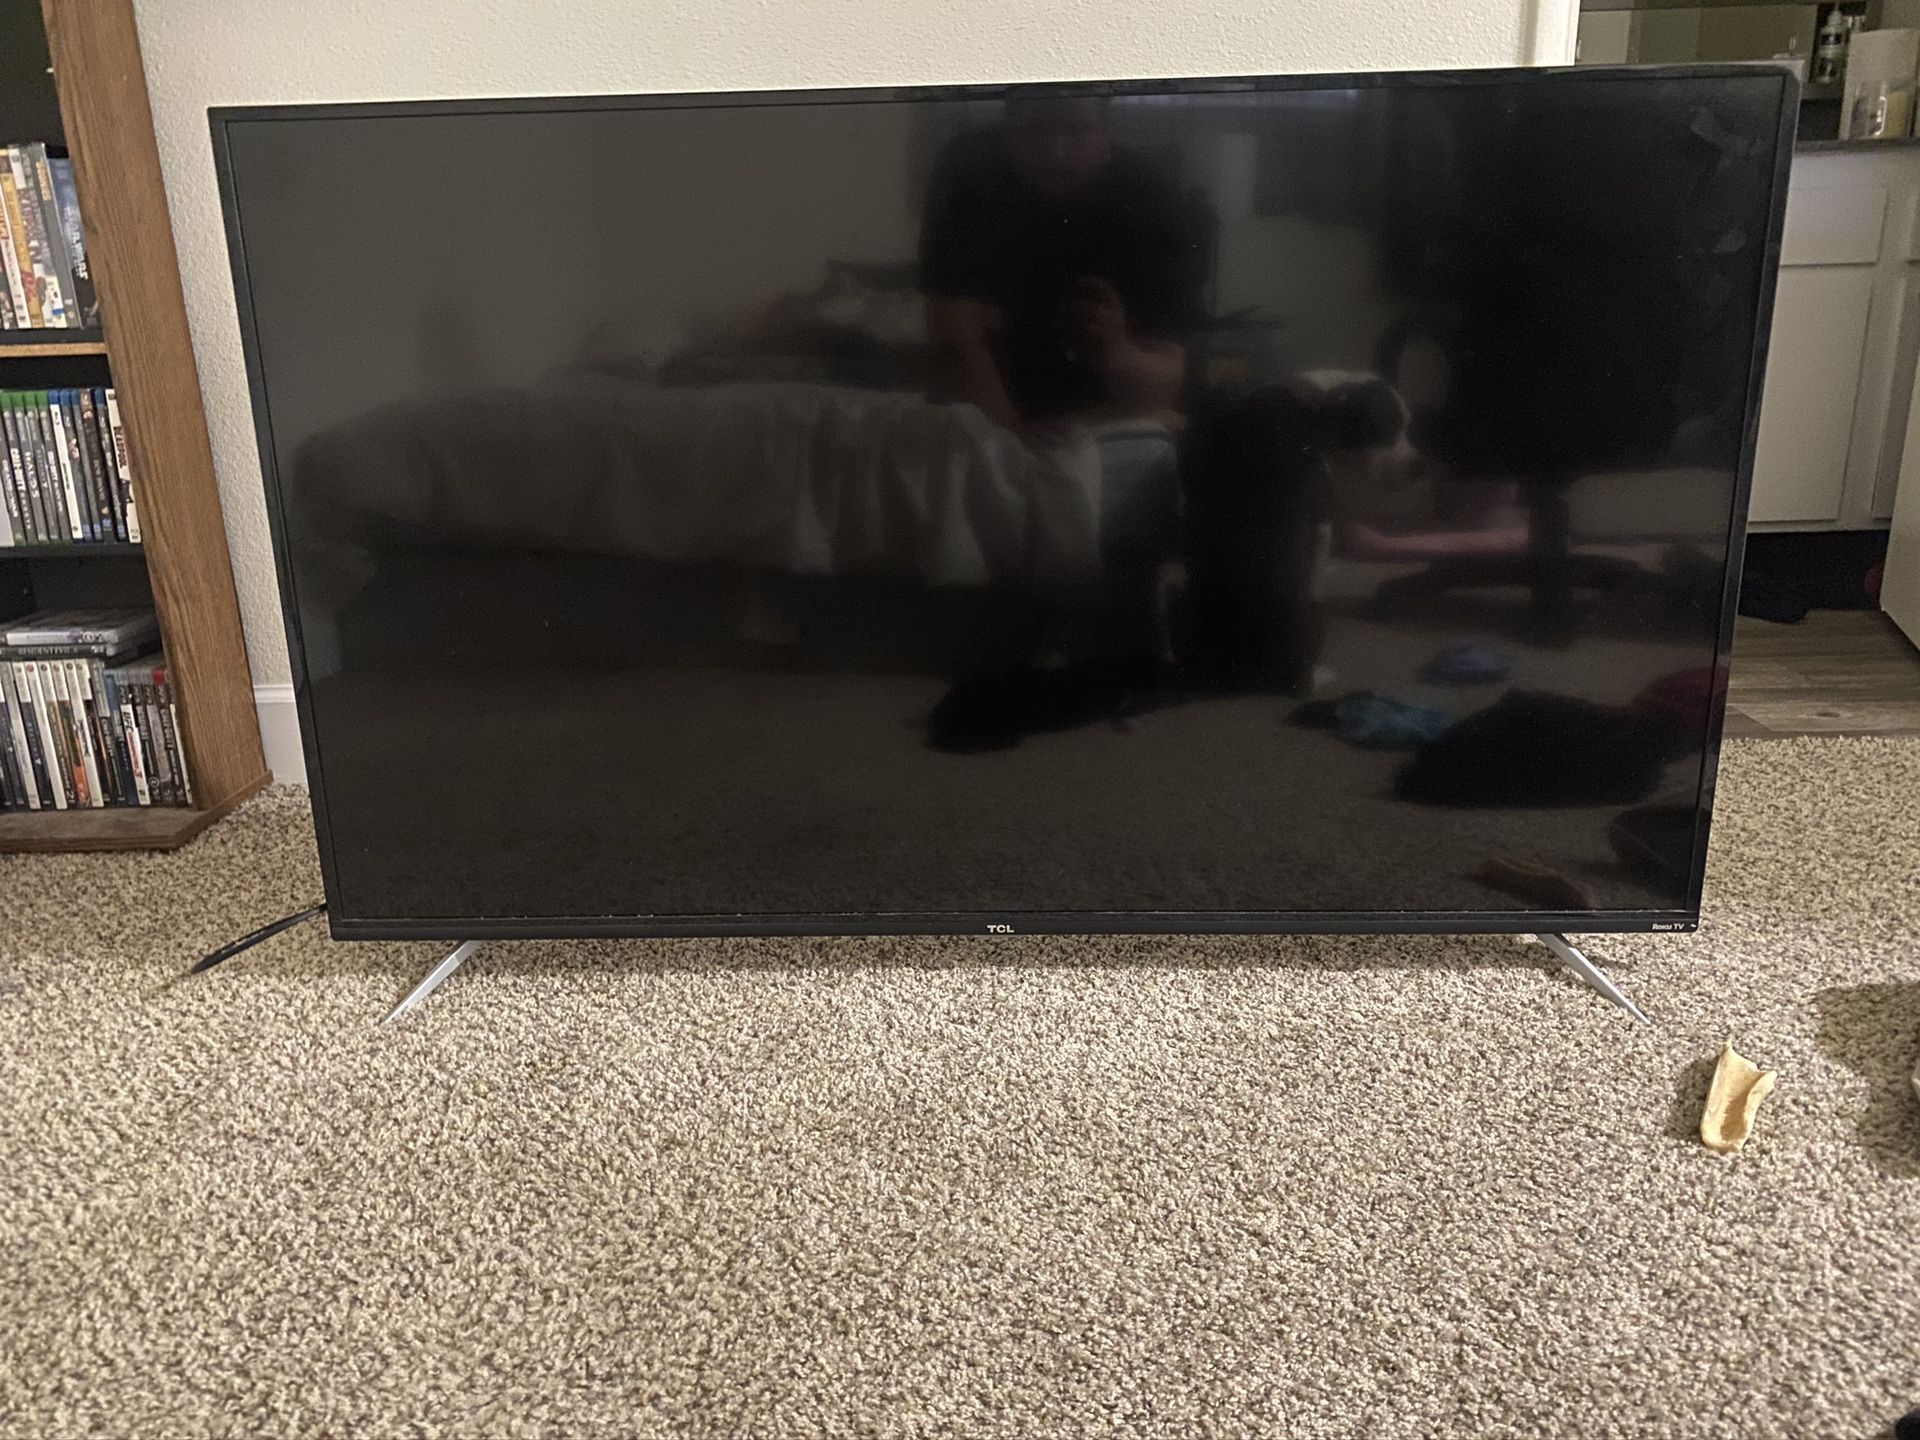 TCL smart tv(screen won’t turn on)